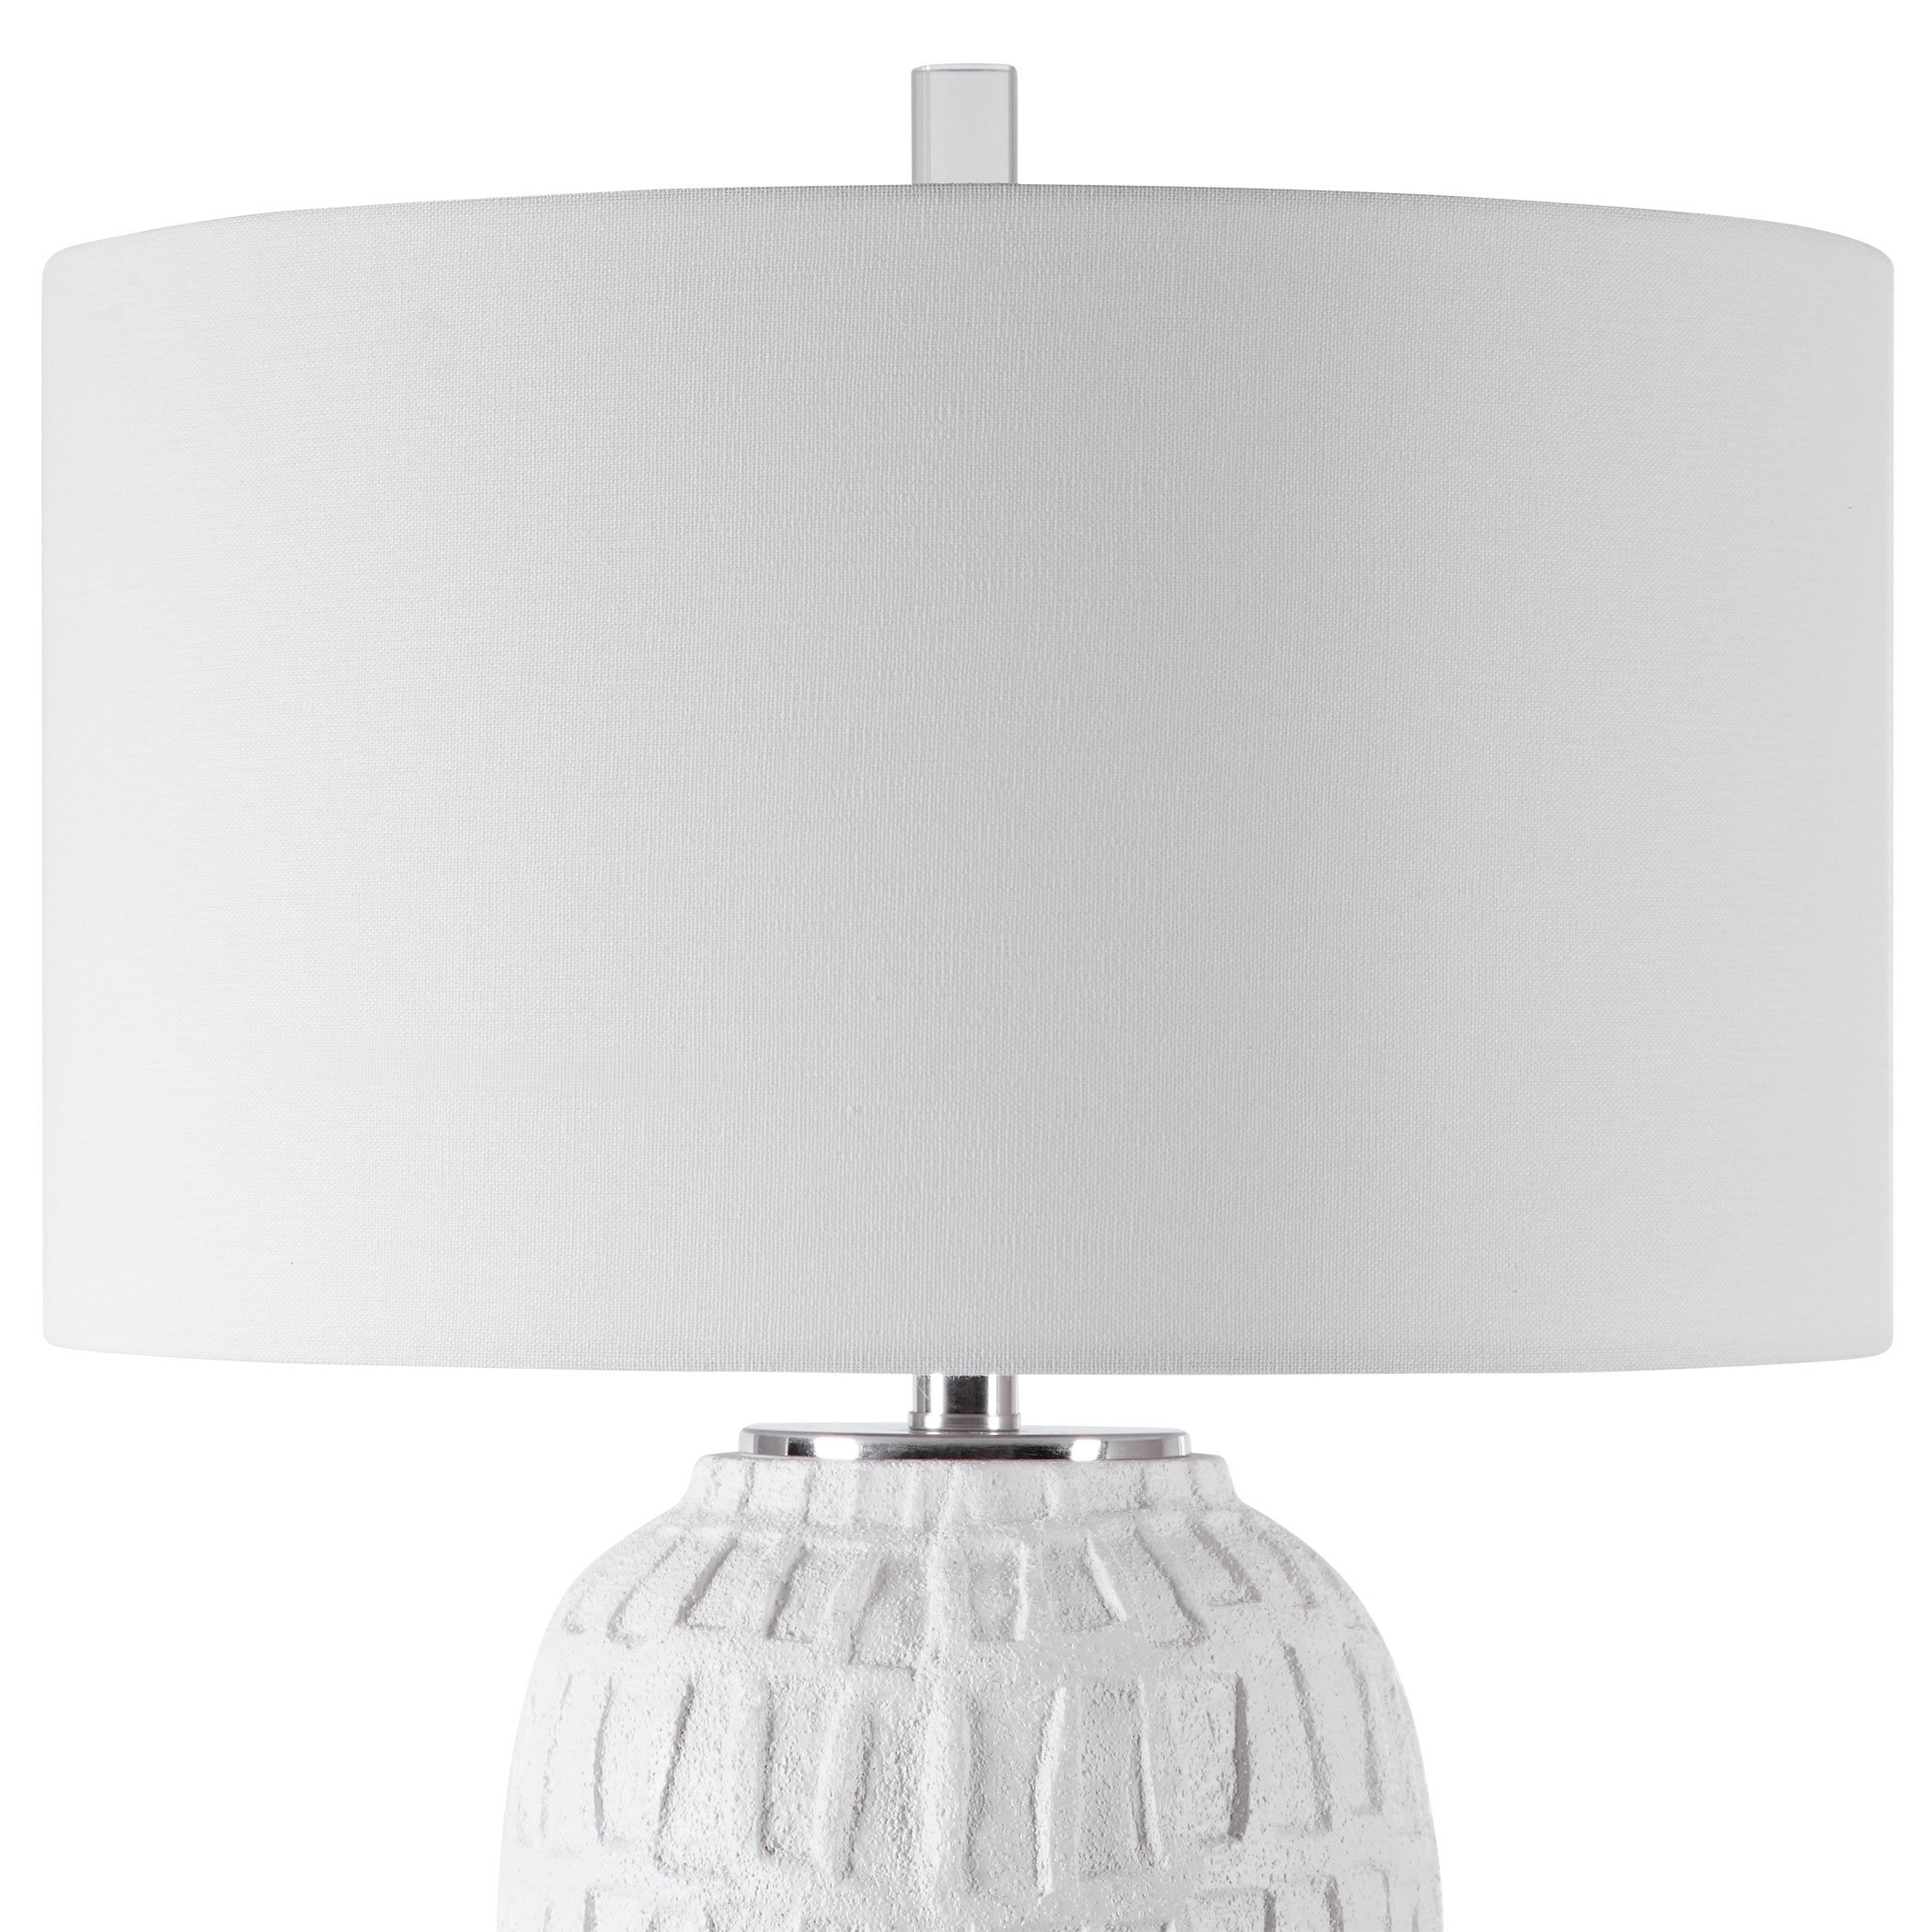 Caelina Textured Table Lamp, White - Image 2